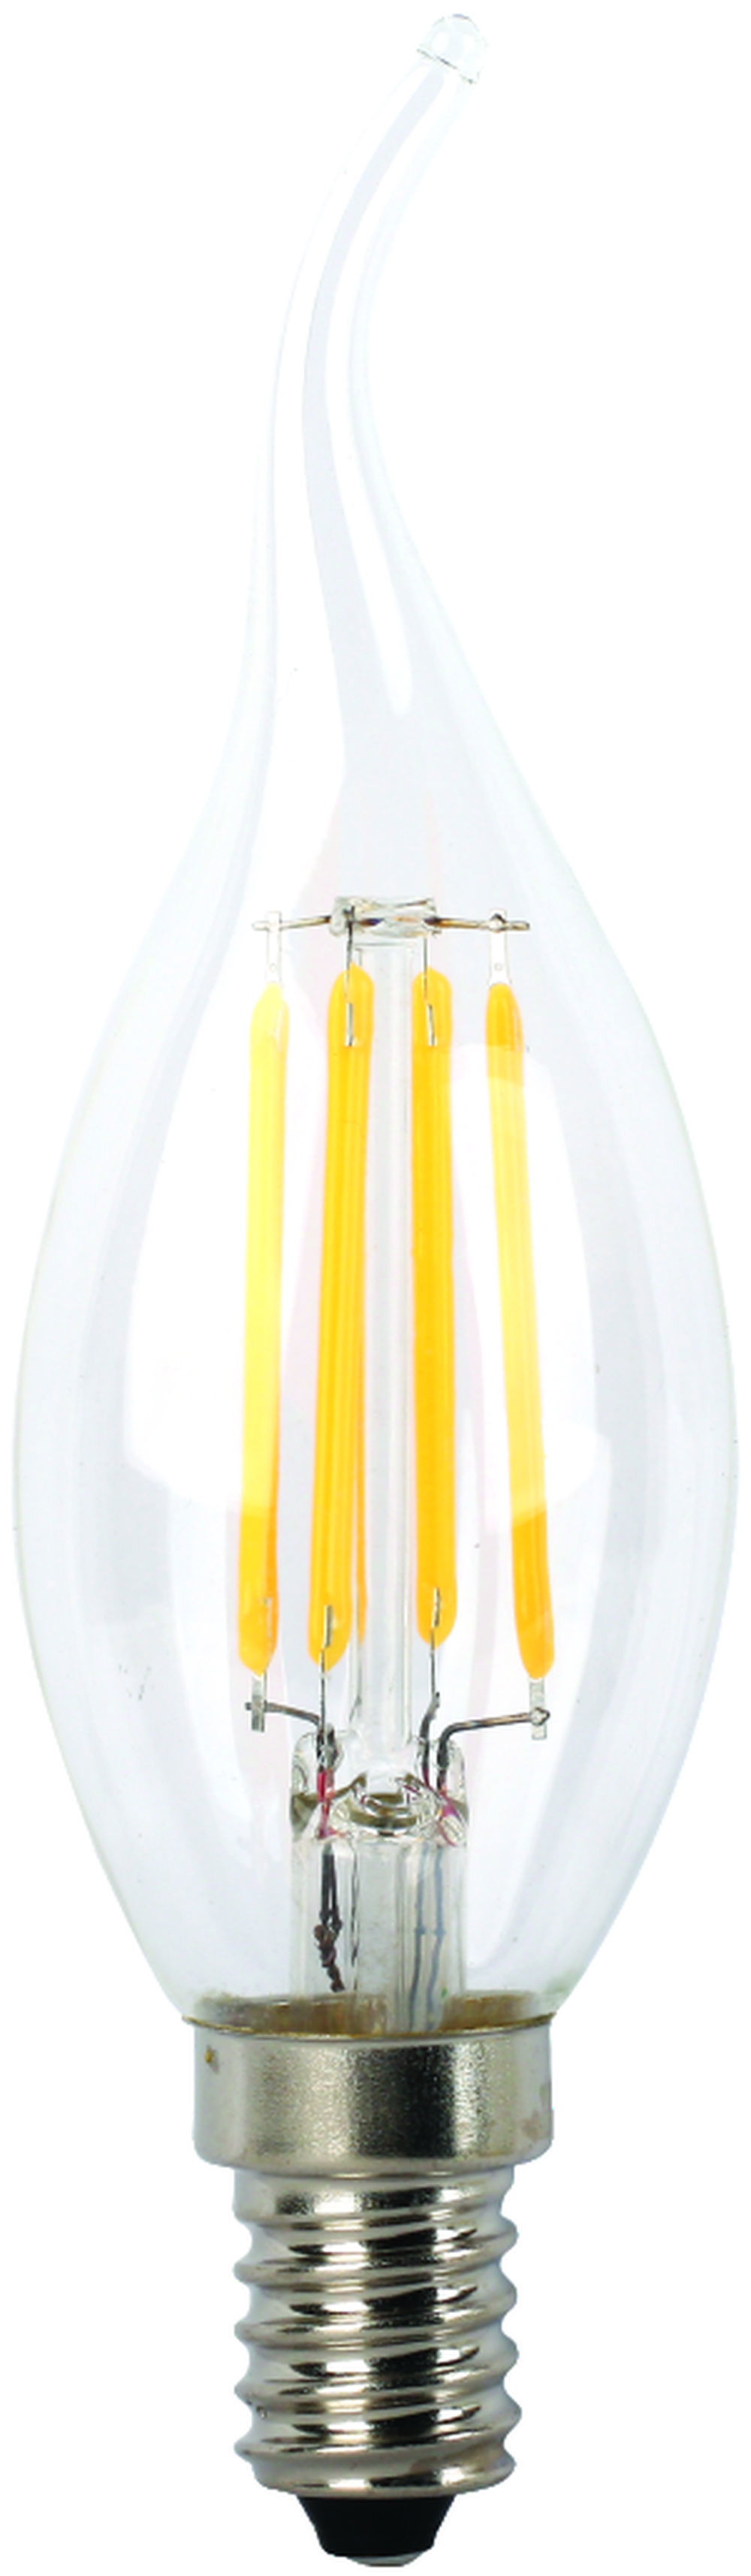 90121427 Лампа Premium светодионая E14 6 Вт свеча на ветру 600 Лм теплый свет STLM-0112543 ECOLA